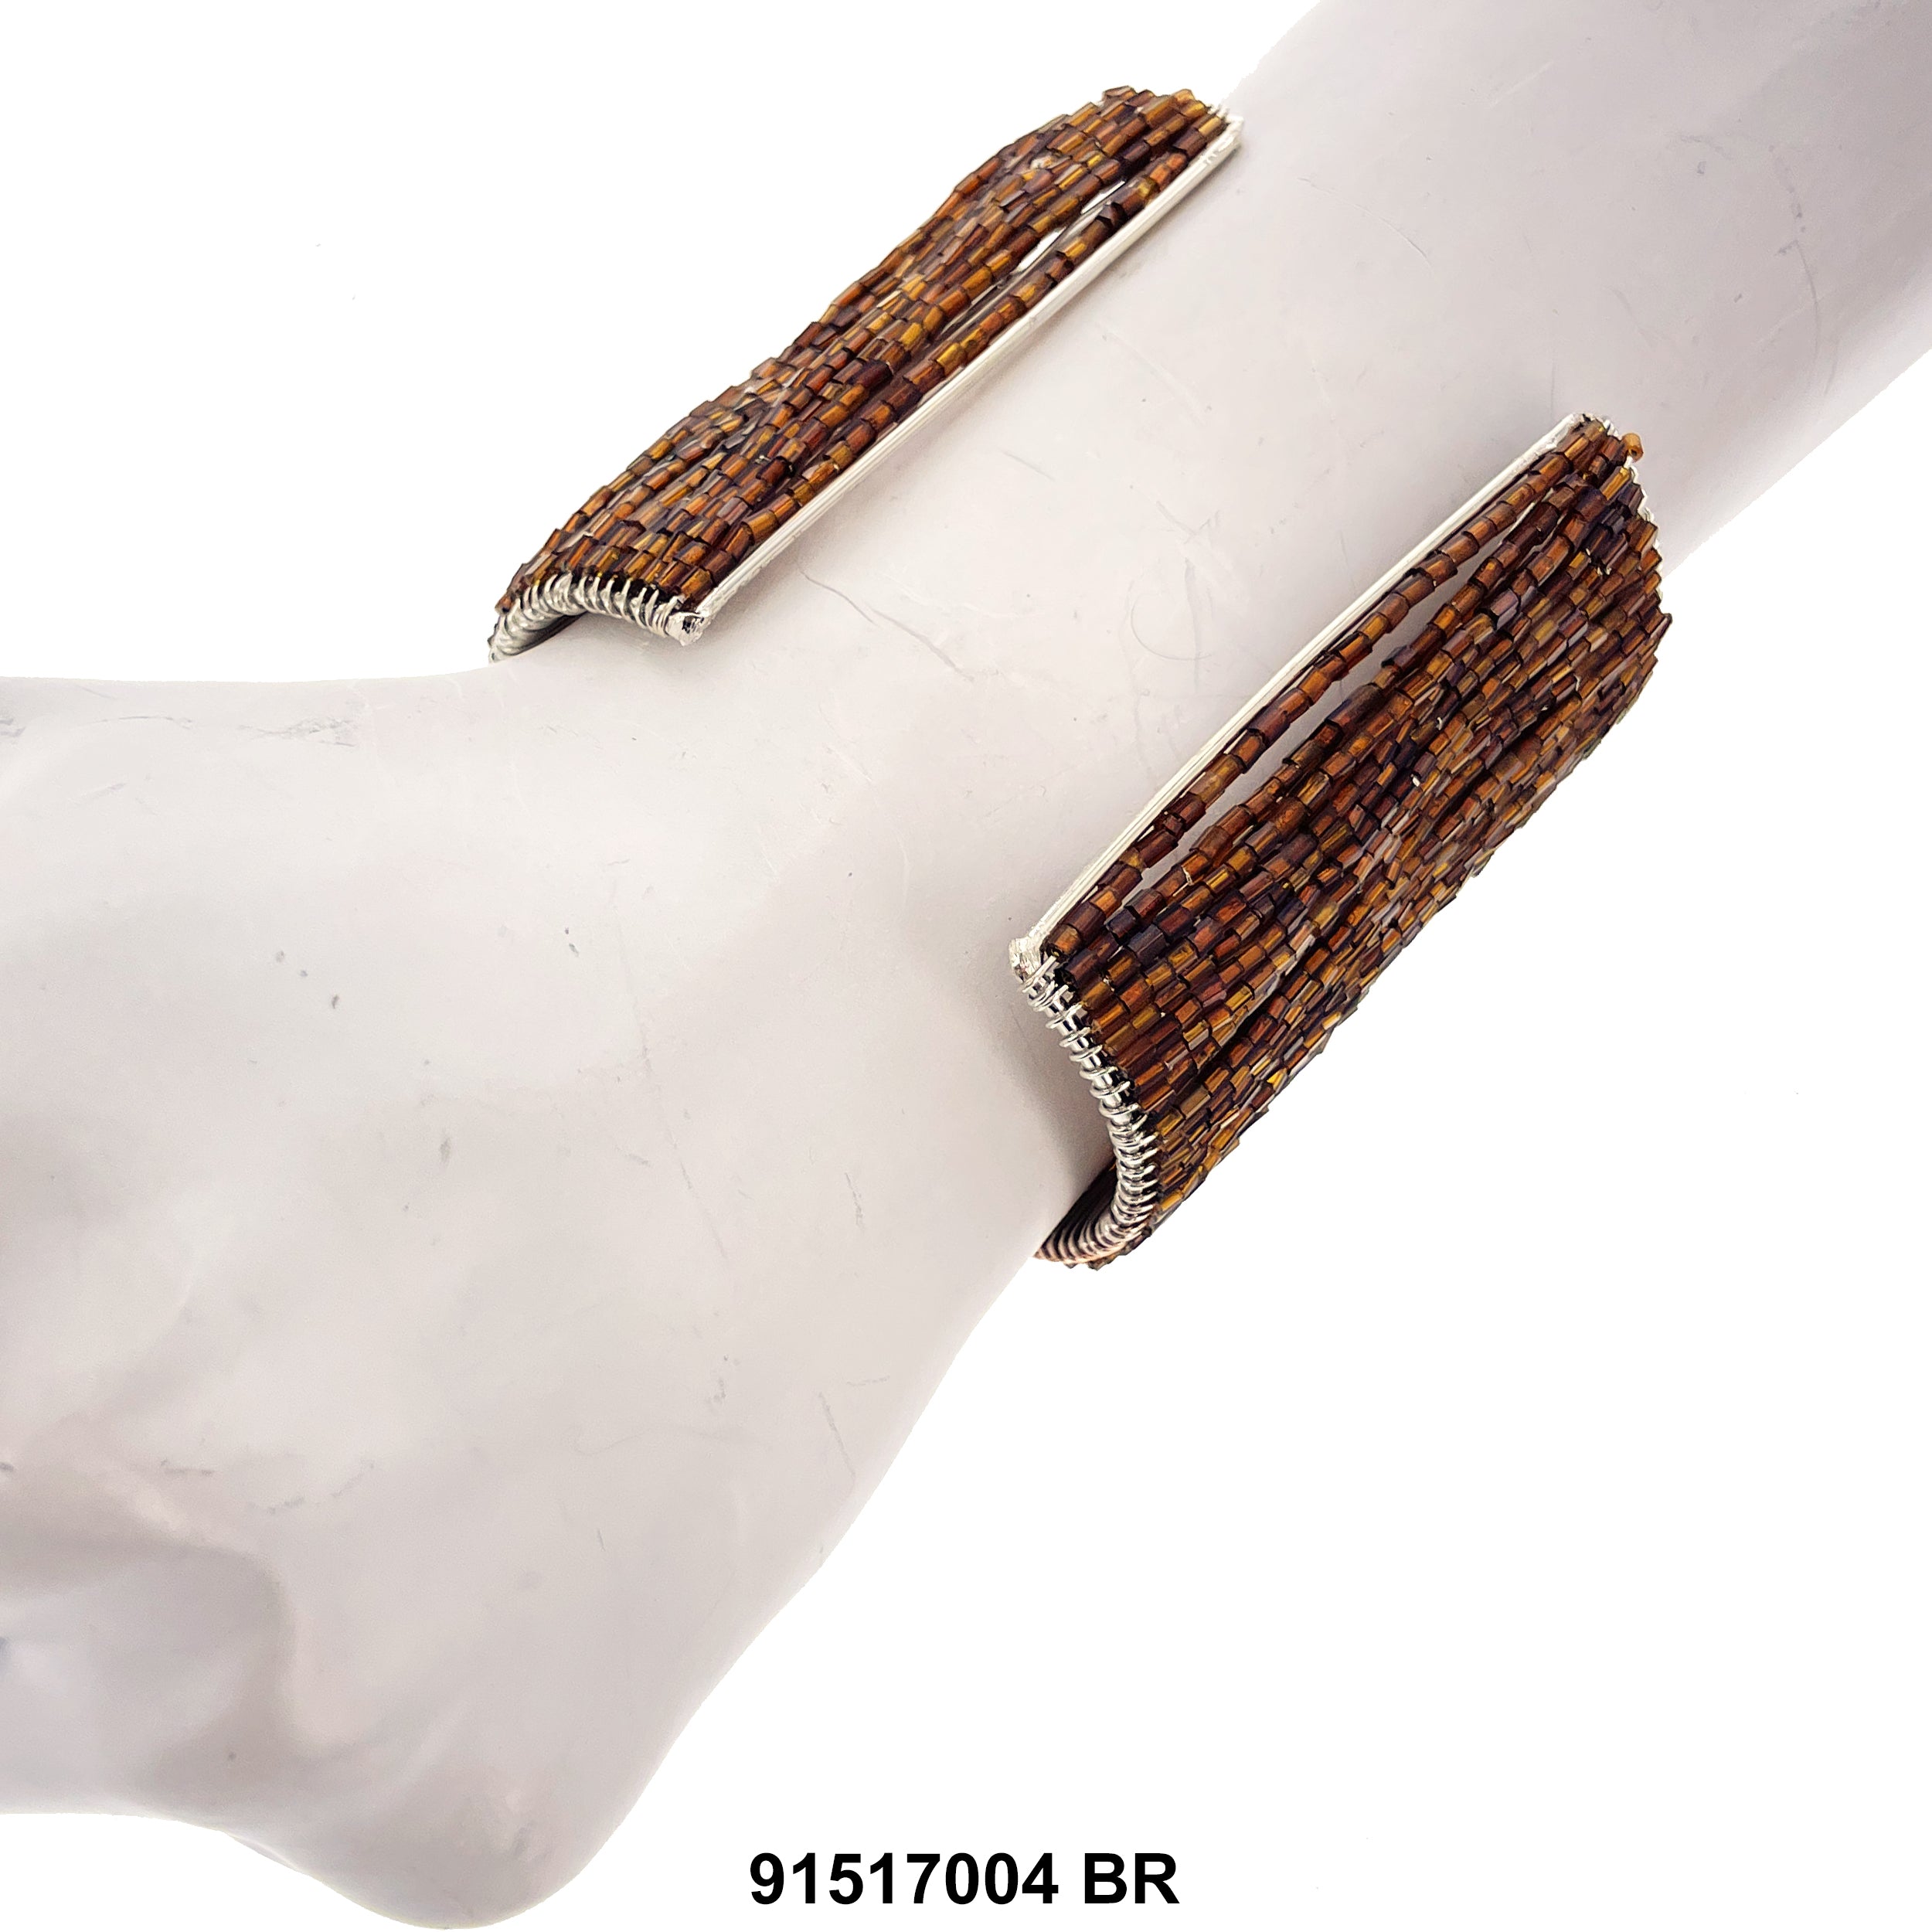 Cuff Bangle Bracelet 91517004 BR